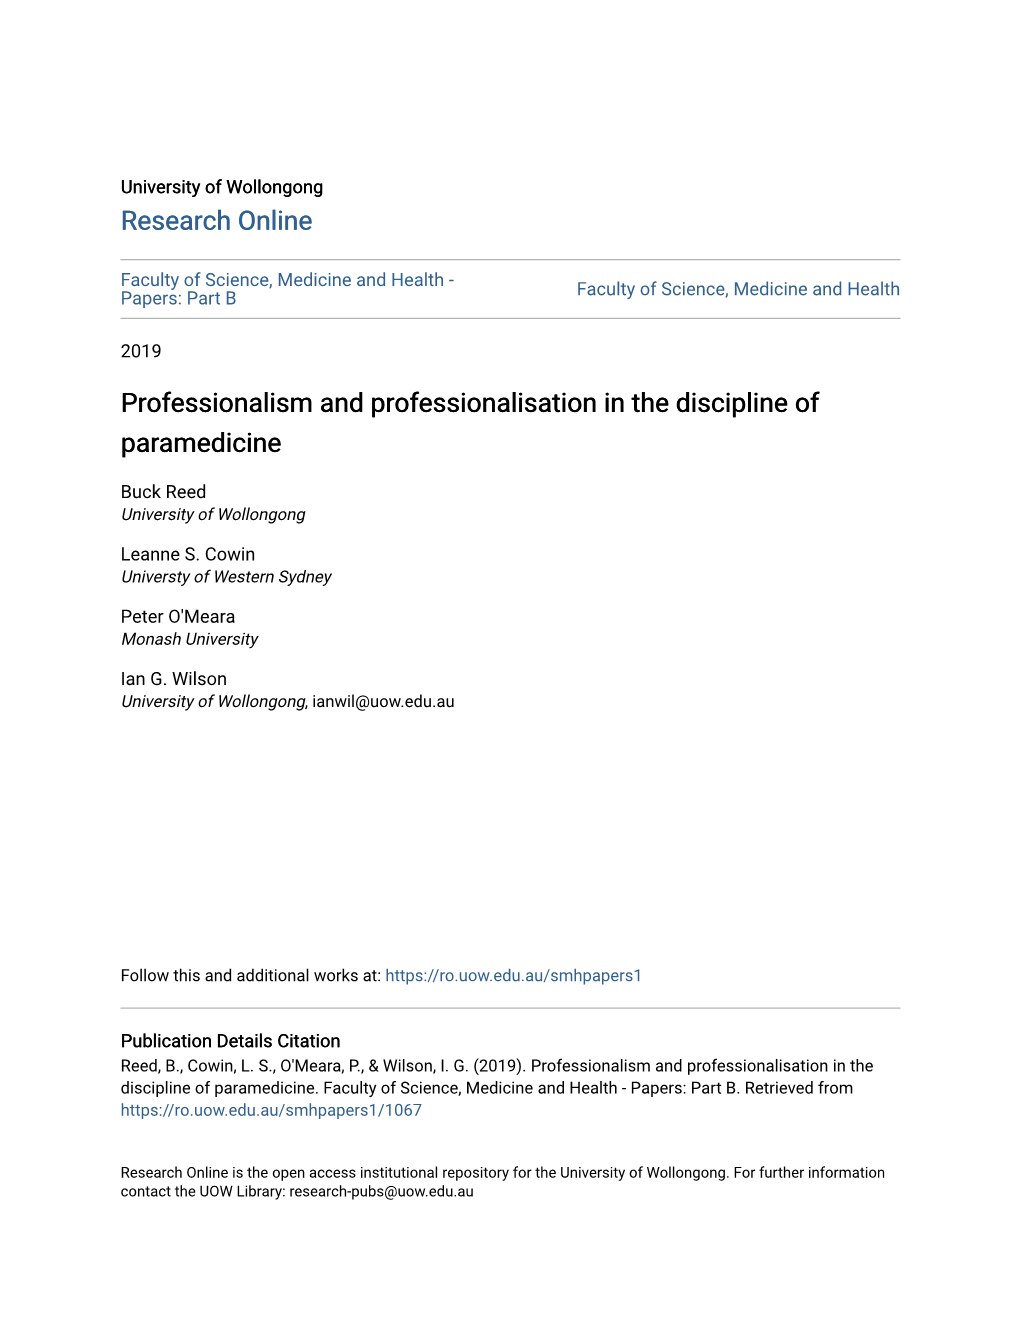 Professionalism and Professionalisation in the Discipline of Paramedicine